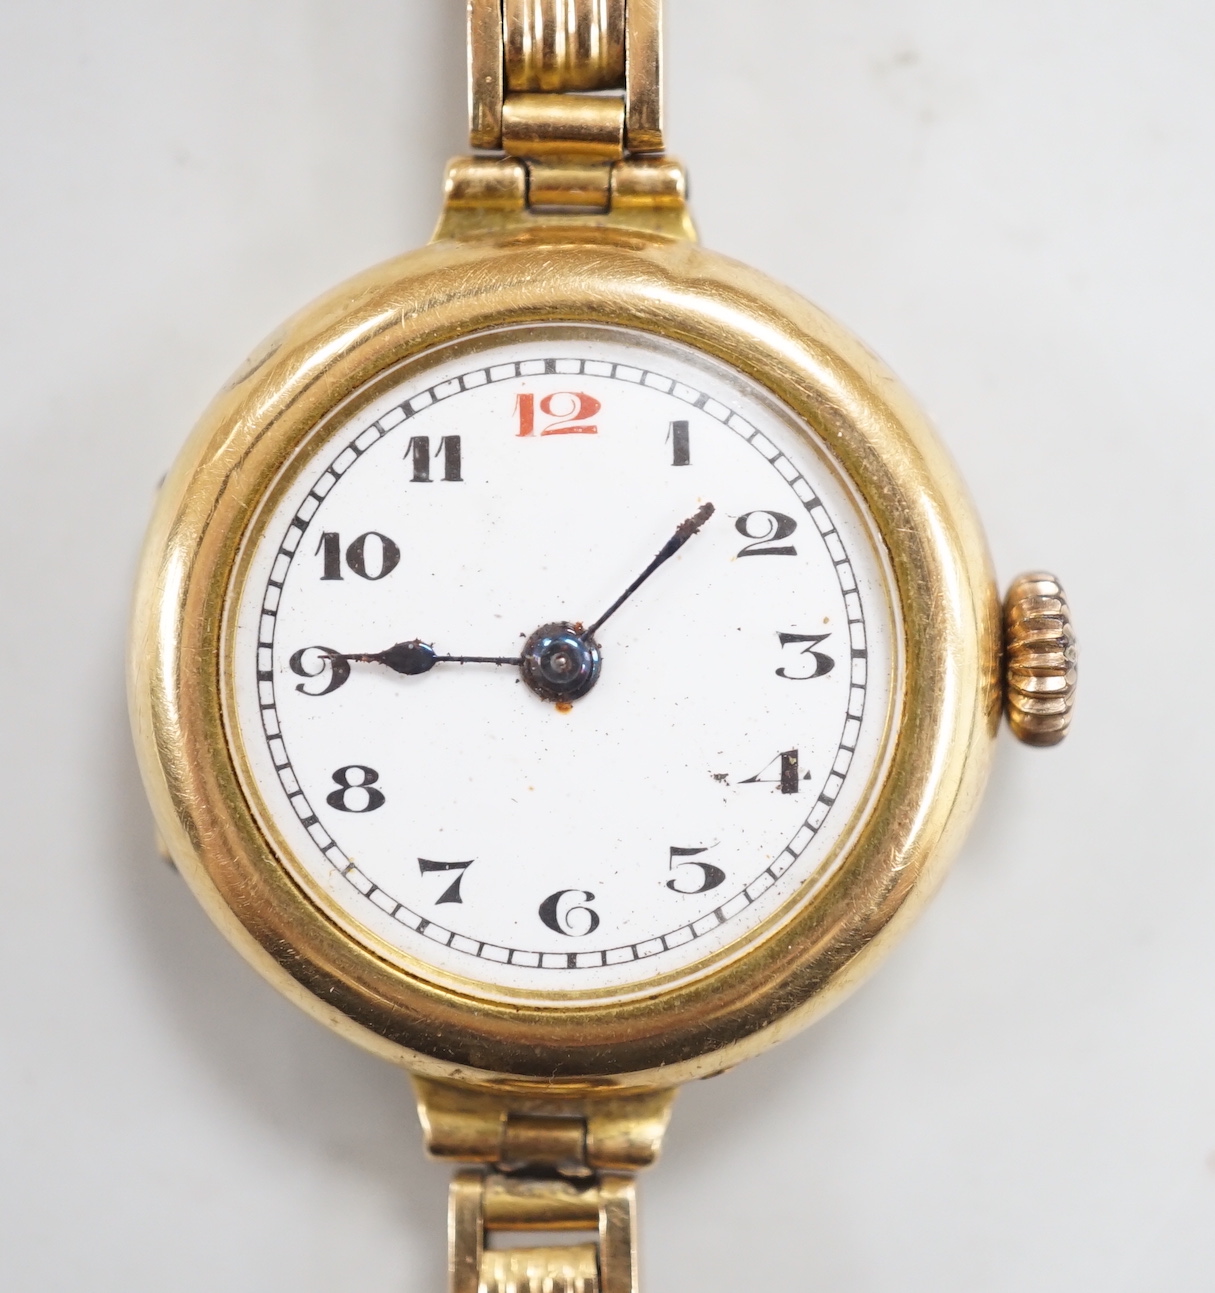 An early 20th century 18ct gold manual wind wrist watch, on an 18ct flexible bracelet, case diameter